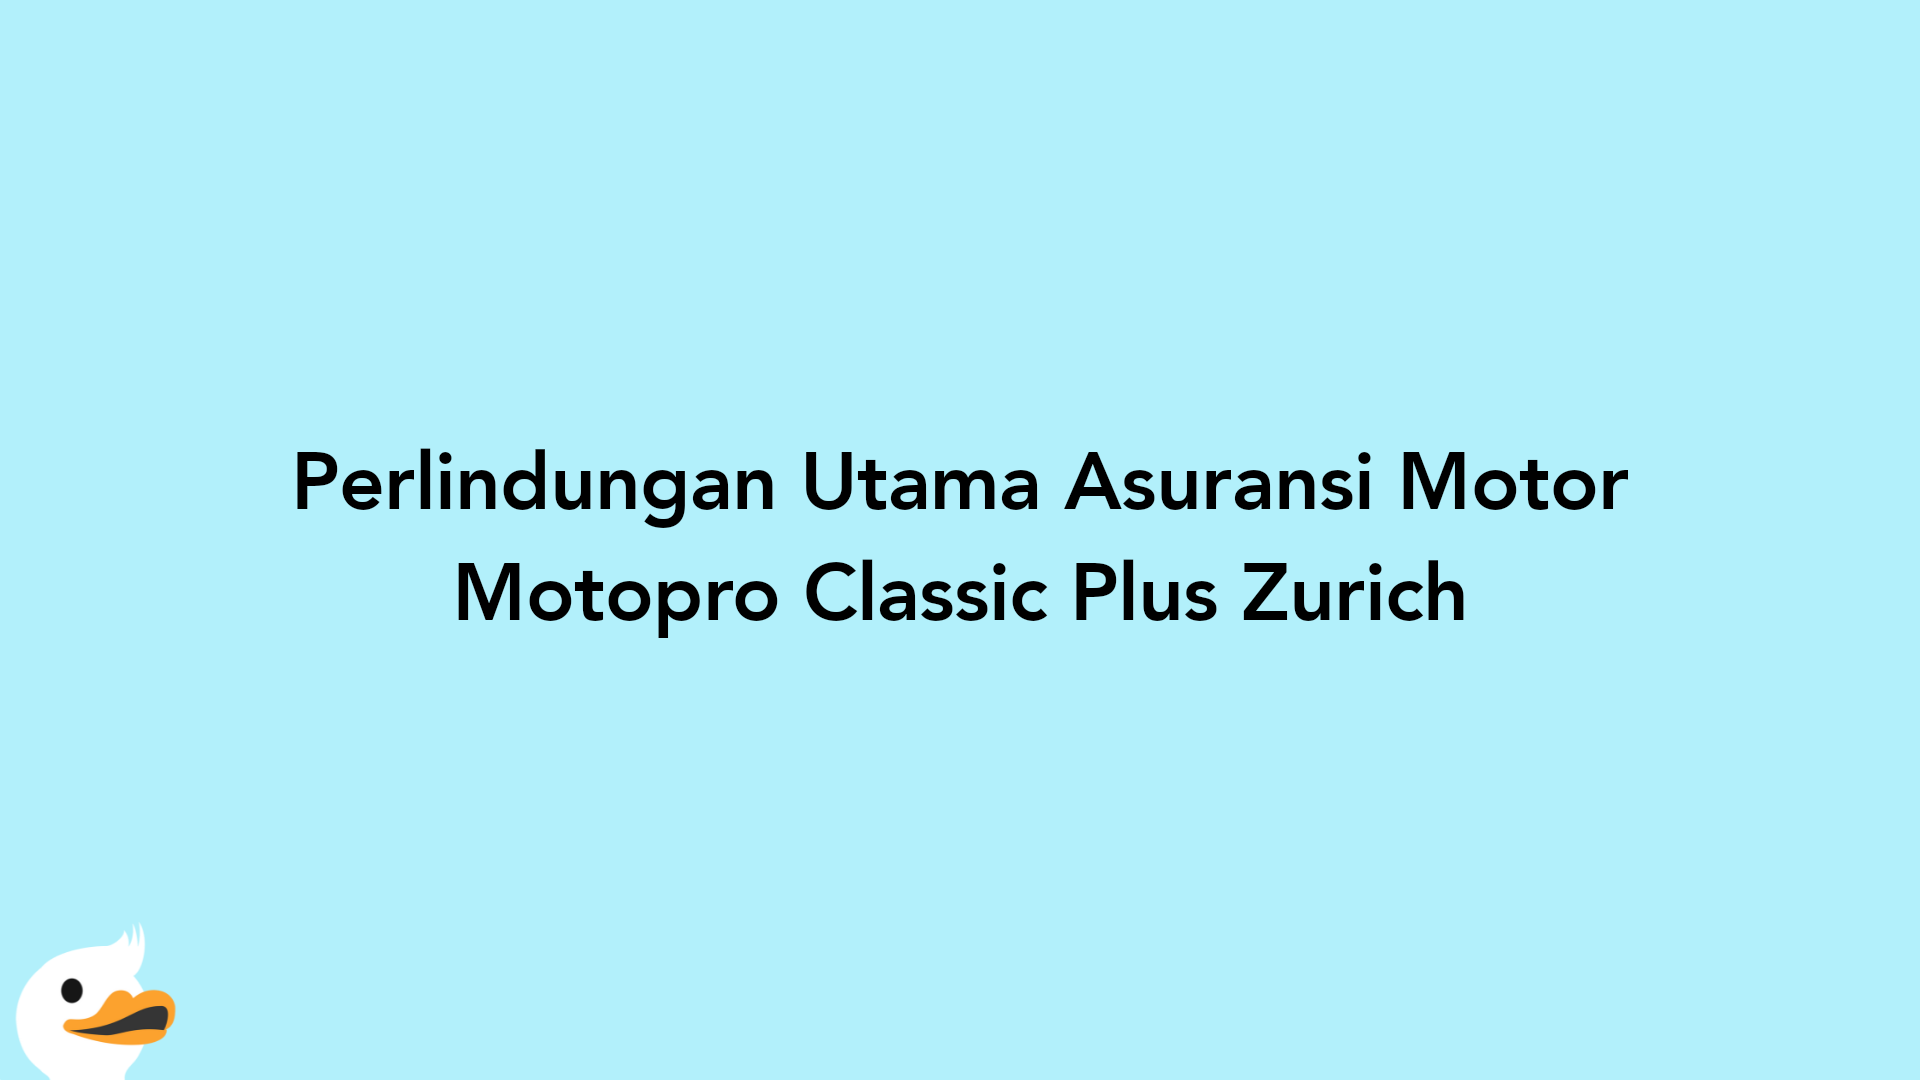 Perlindungan Utama Asuransi Motor Motopro Classic Plus Zurich